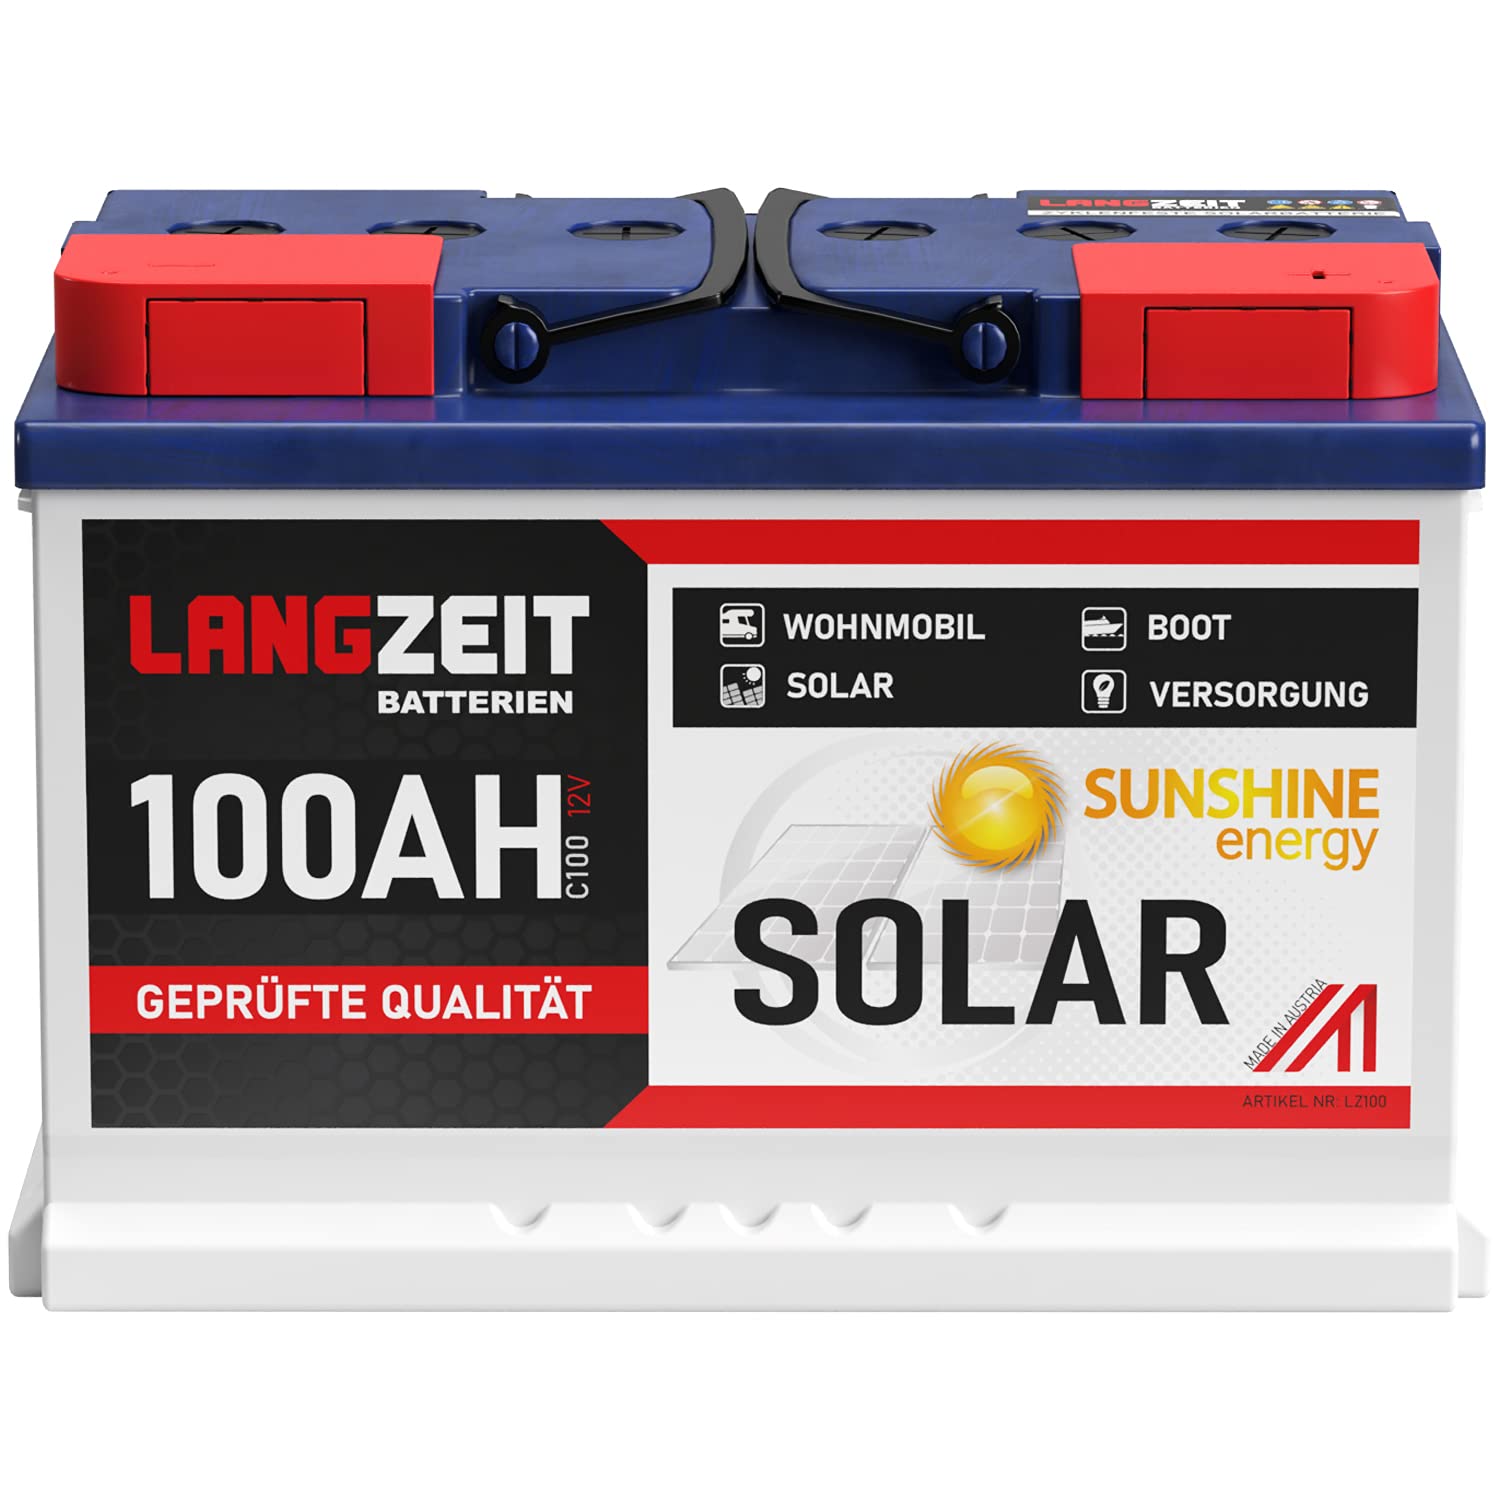 LANGZEIT 100Ah 12V Solarbatterie Boot Marine Wohnmobil Solar Batterie 80Ah von LANGZEIT Batterien